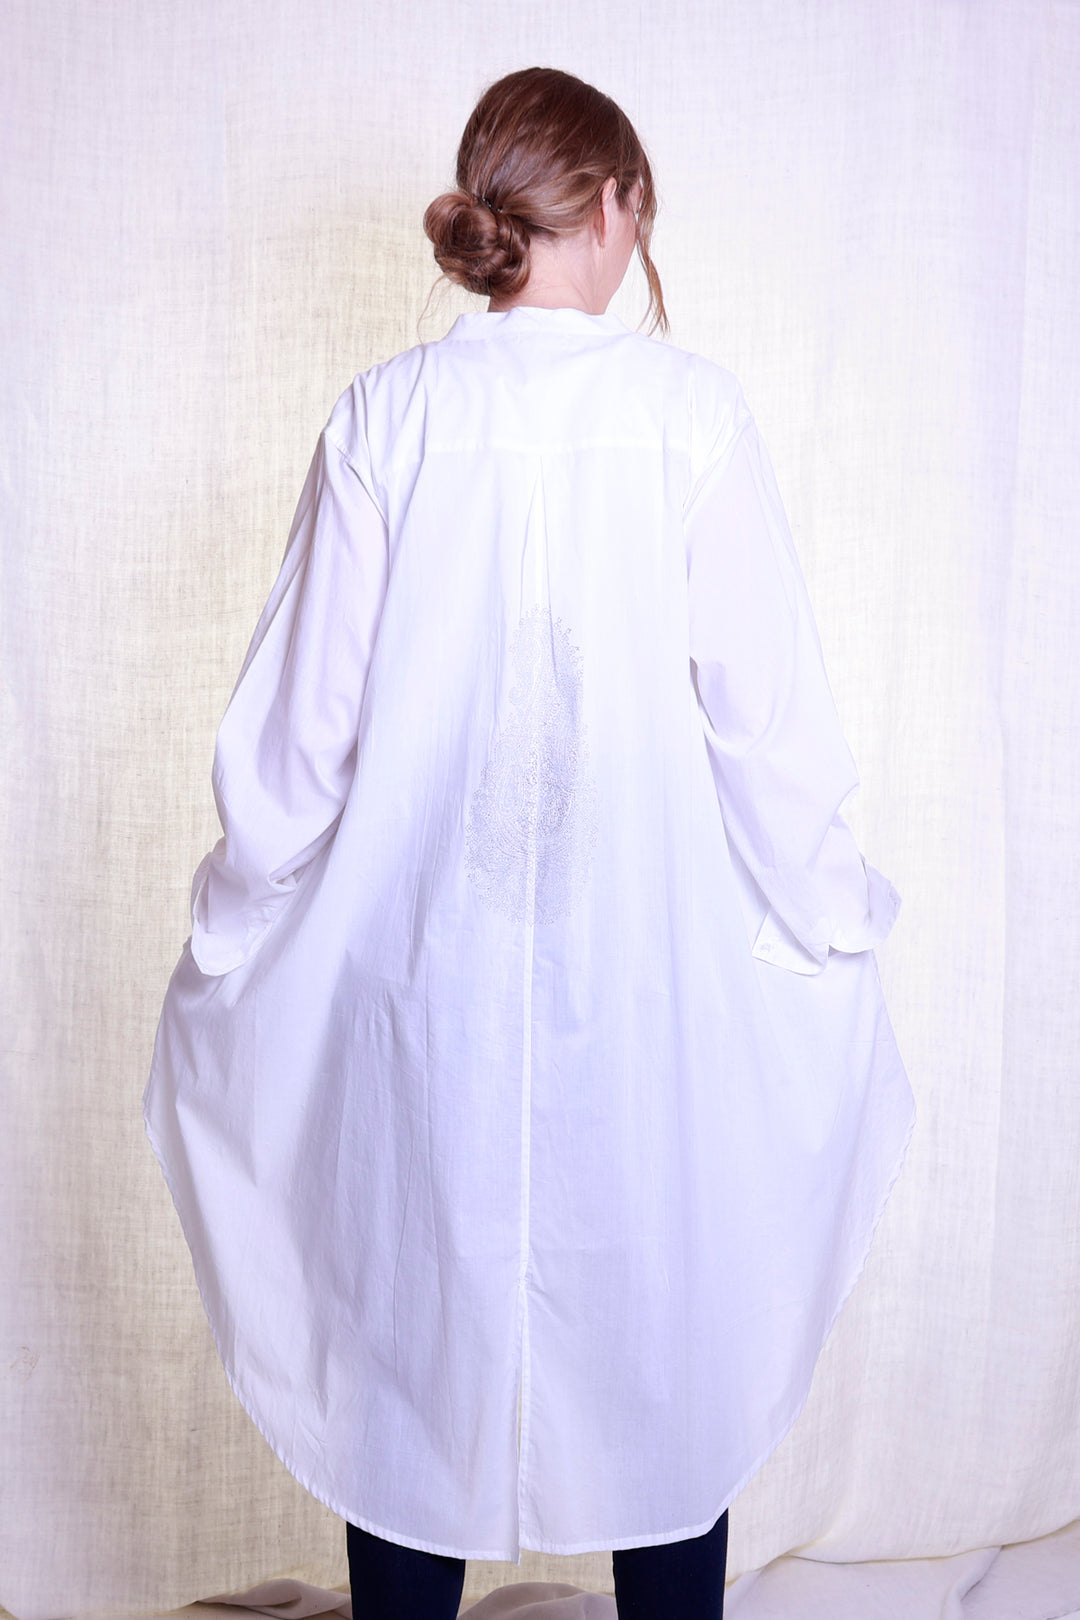 'Lalia' Shirtdress / Plain White Cotton with hand block printed Motif | Tania Llewellyn Designs